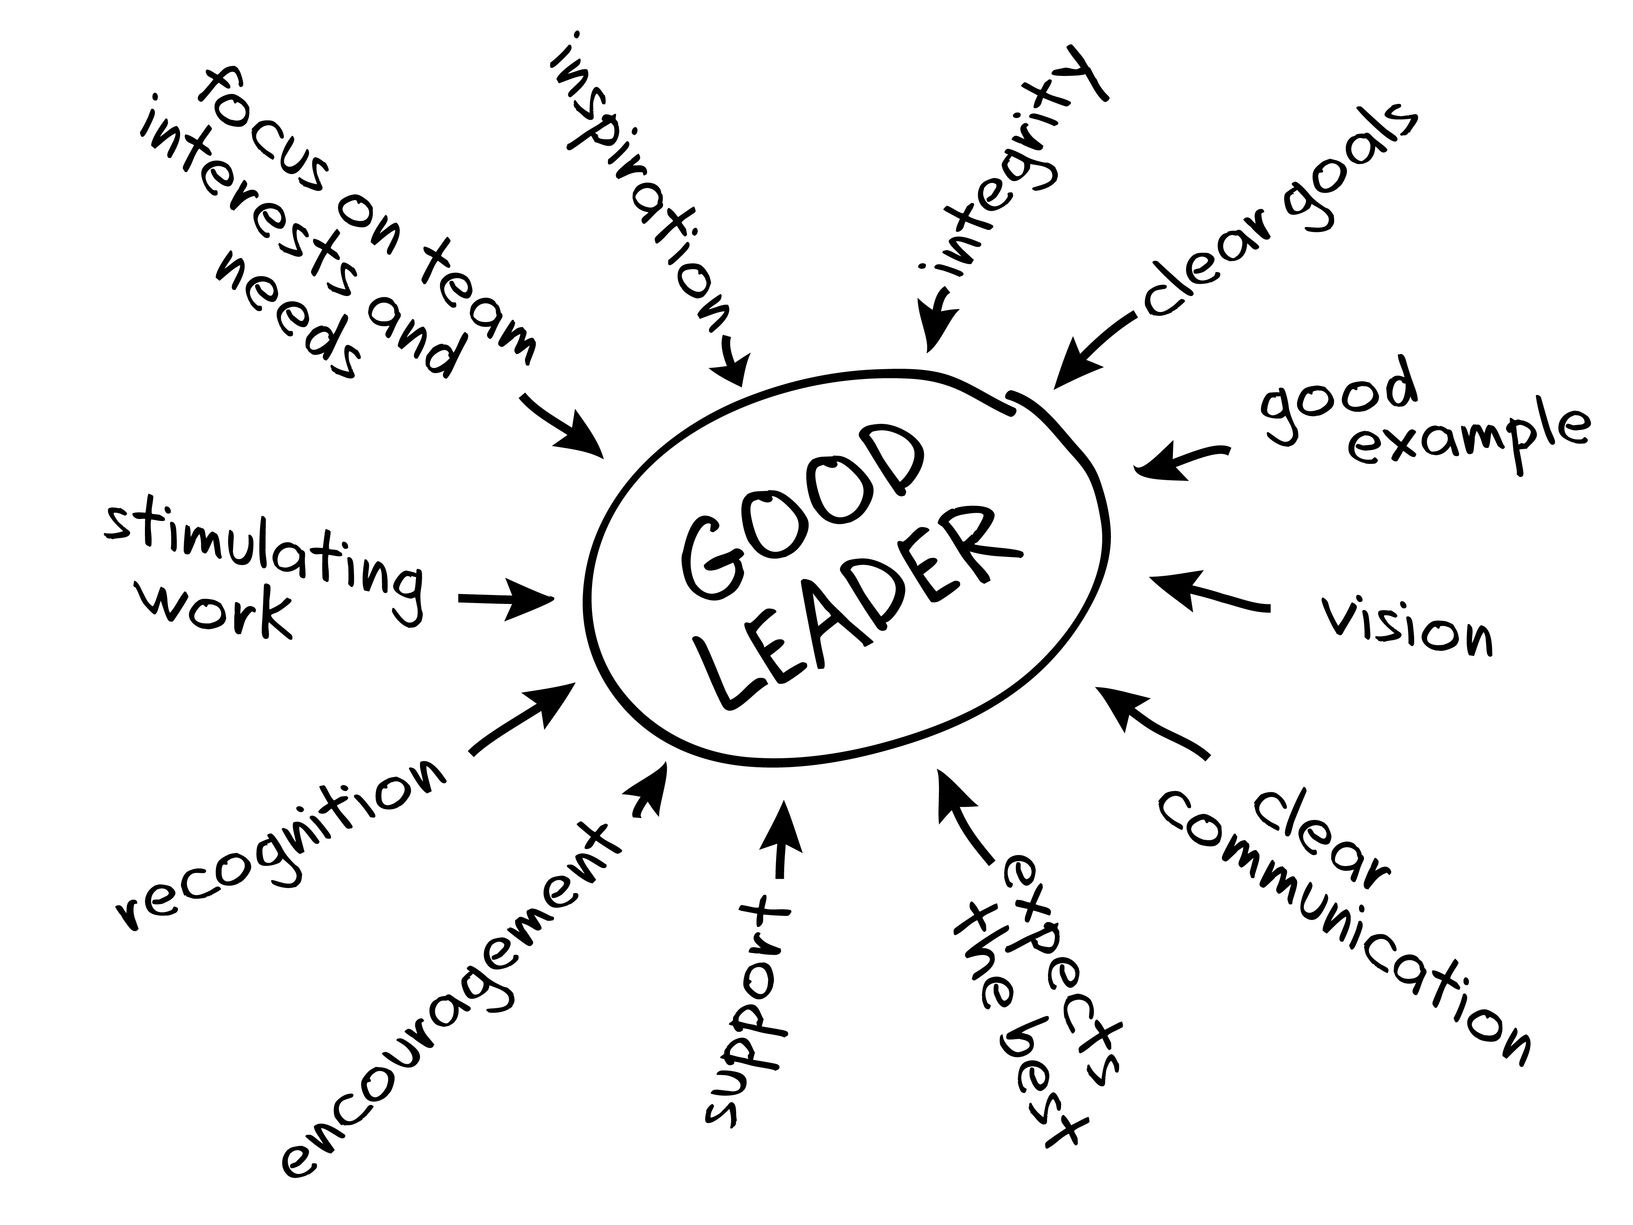 Let's talk leadership - 3 more tips! 1